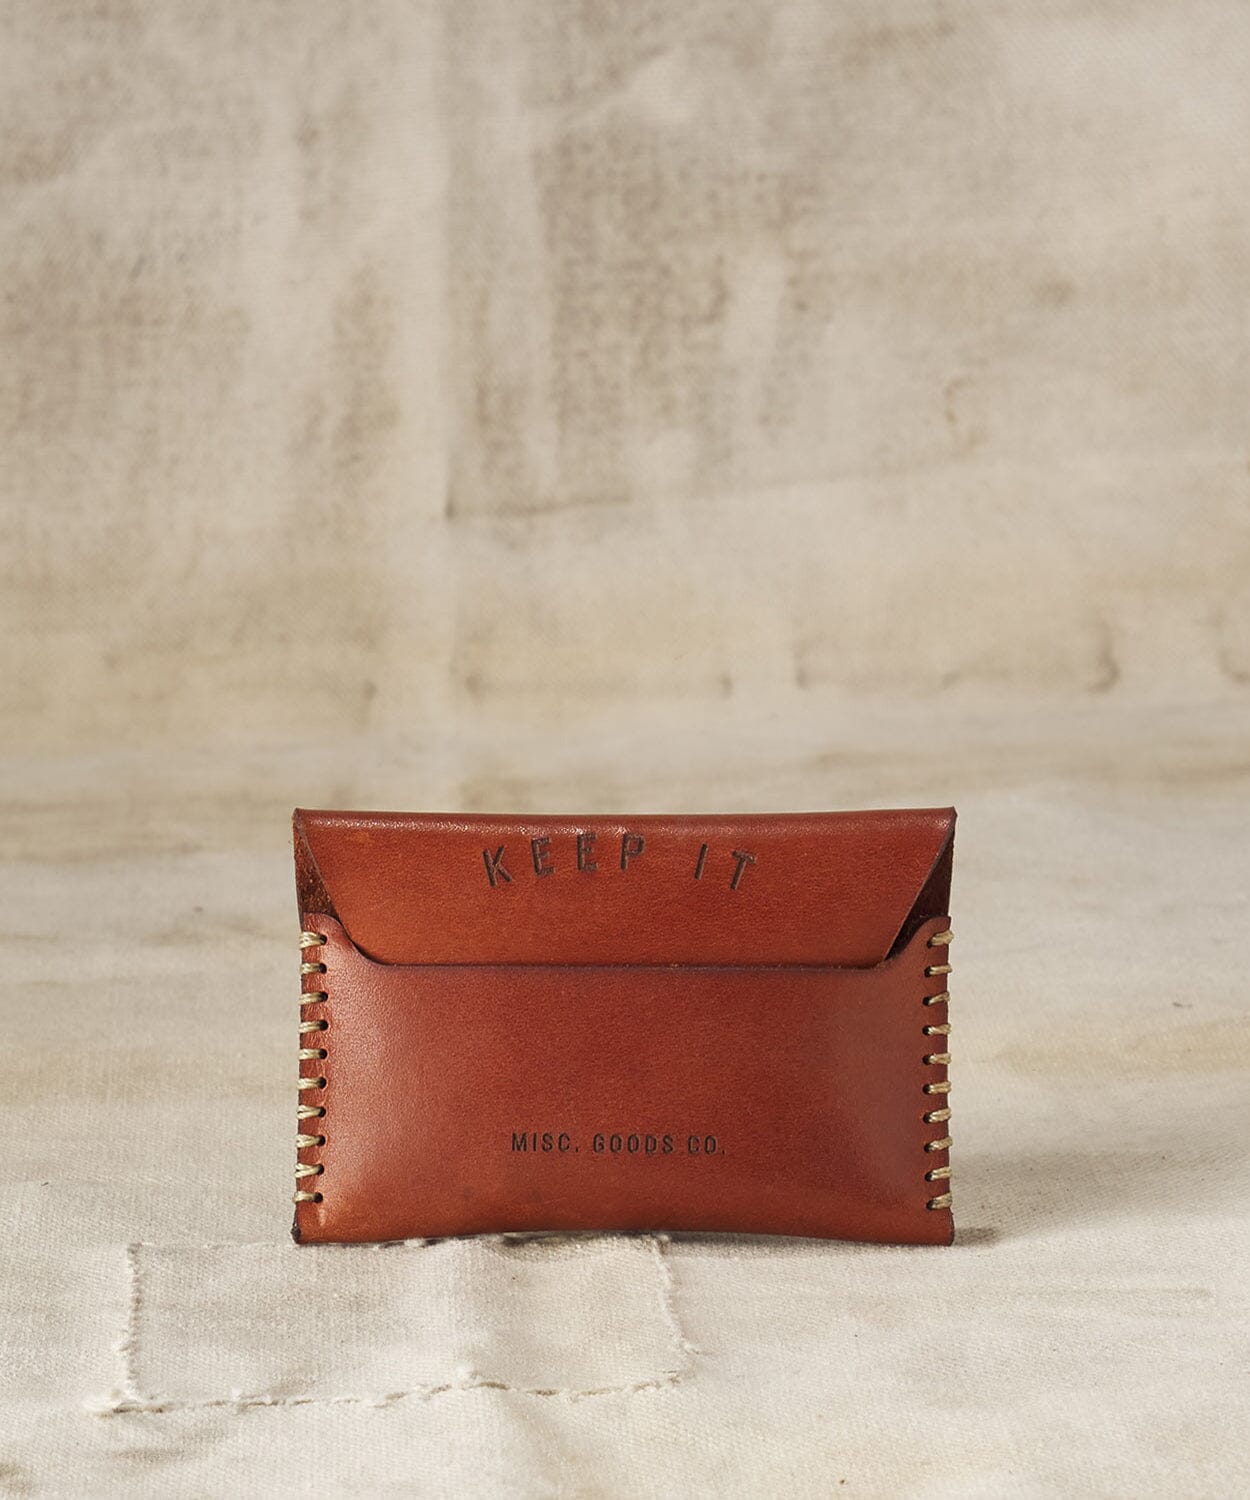 Leather Wallet Accessories Misc. Goods Co. Cognac 